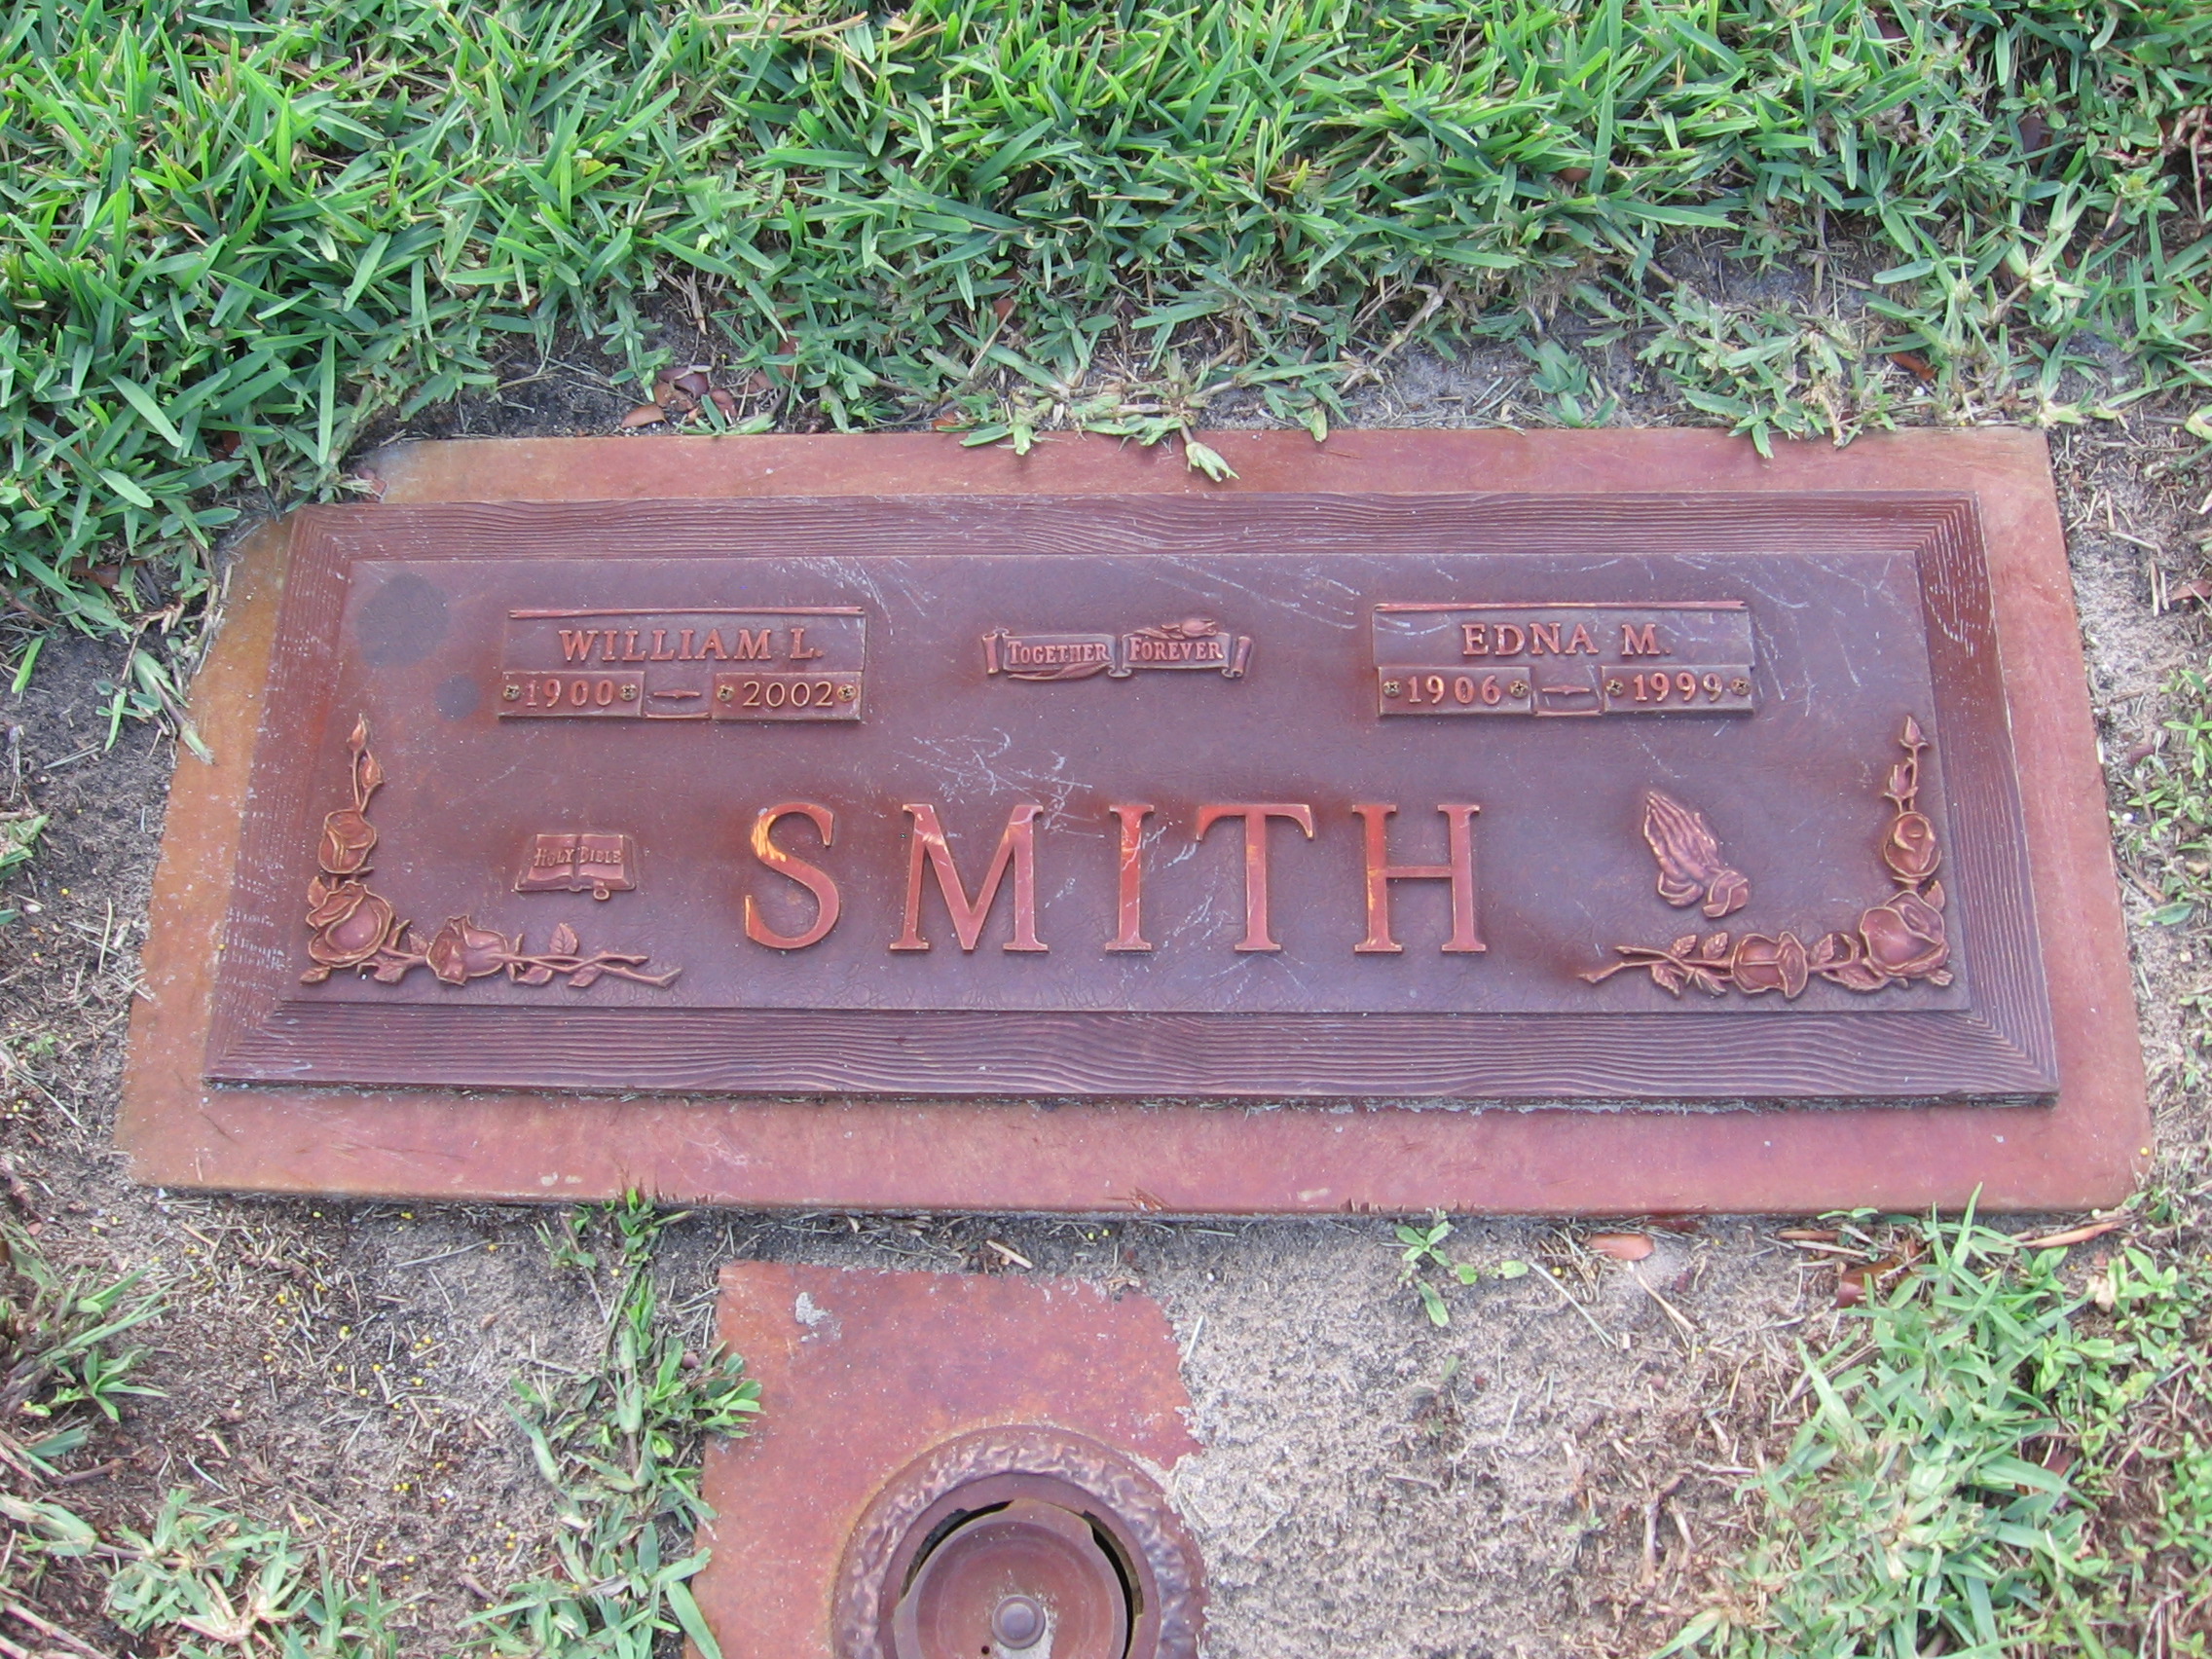 William L Smith